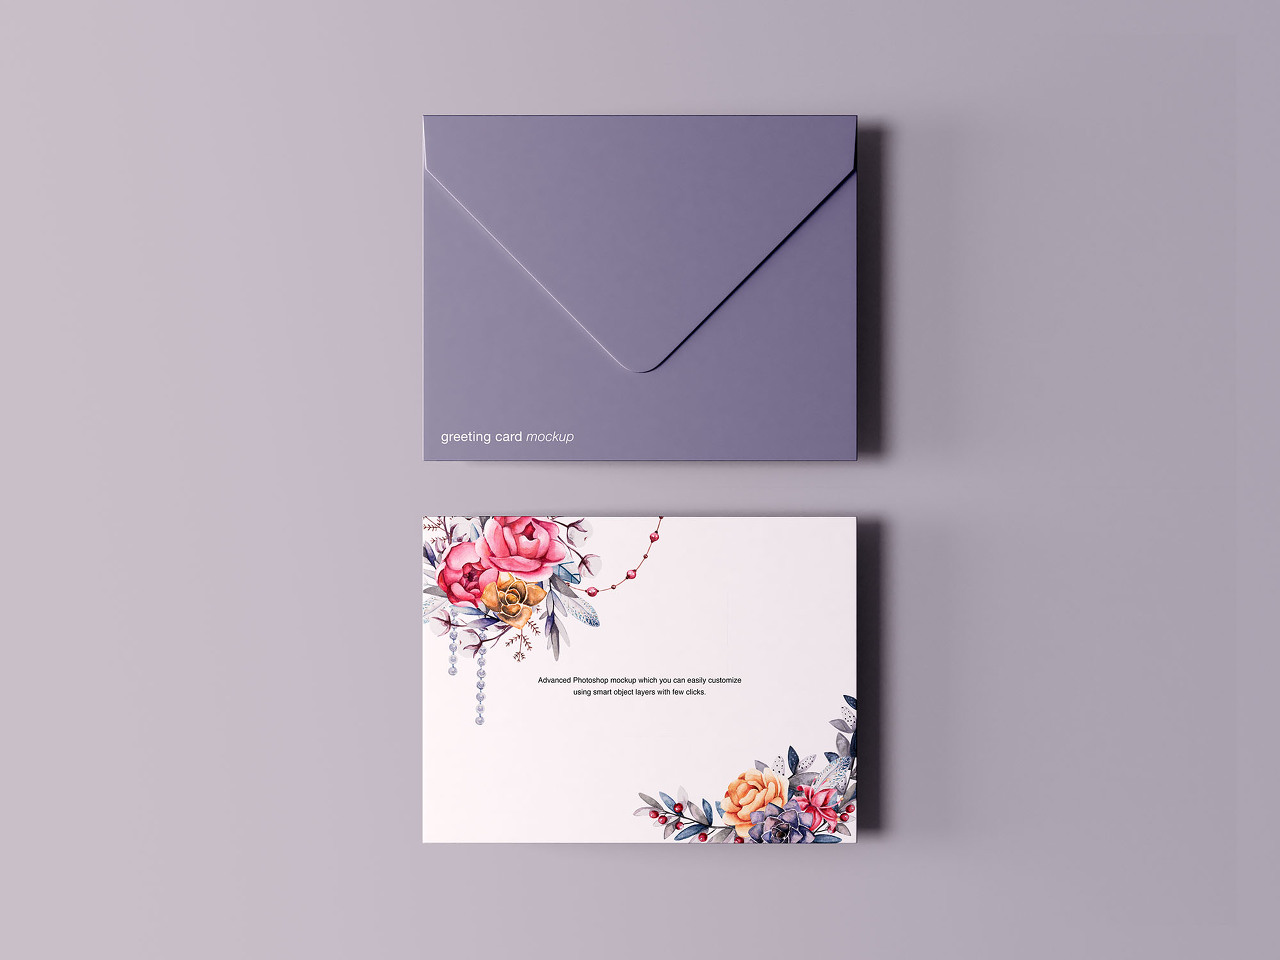 Greeting Card with Envelope Mockup(봉투가 있는 인사말 카드 목업)